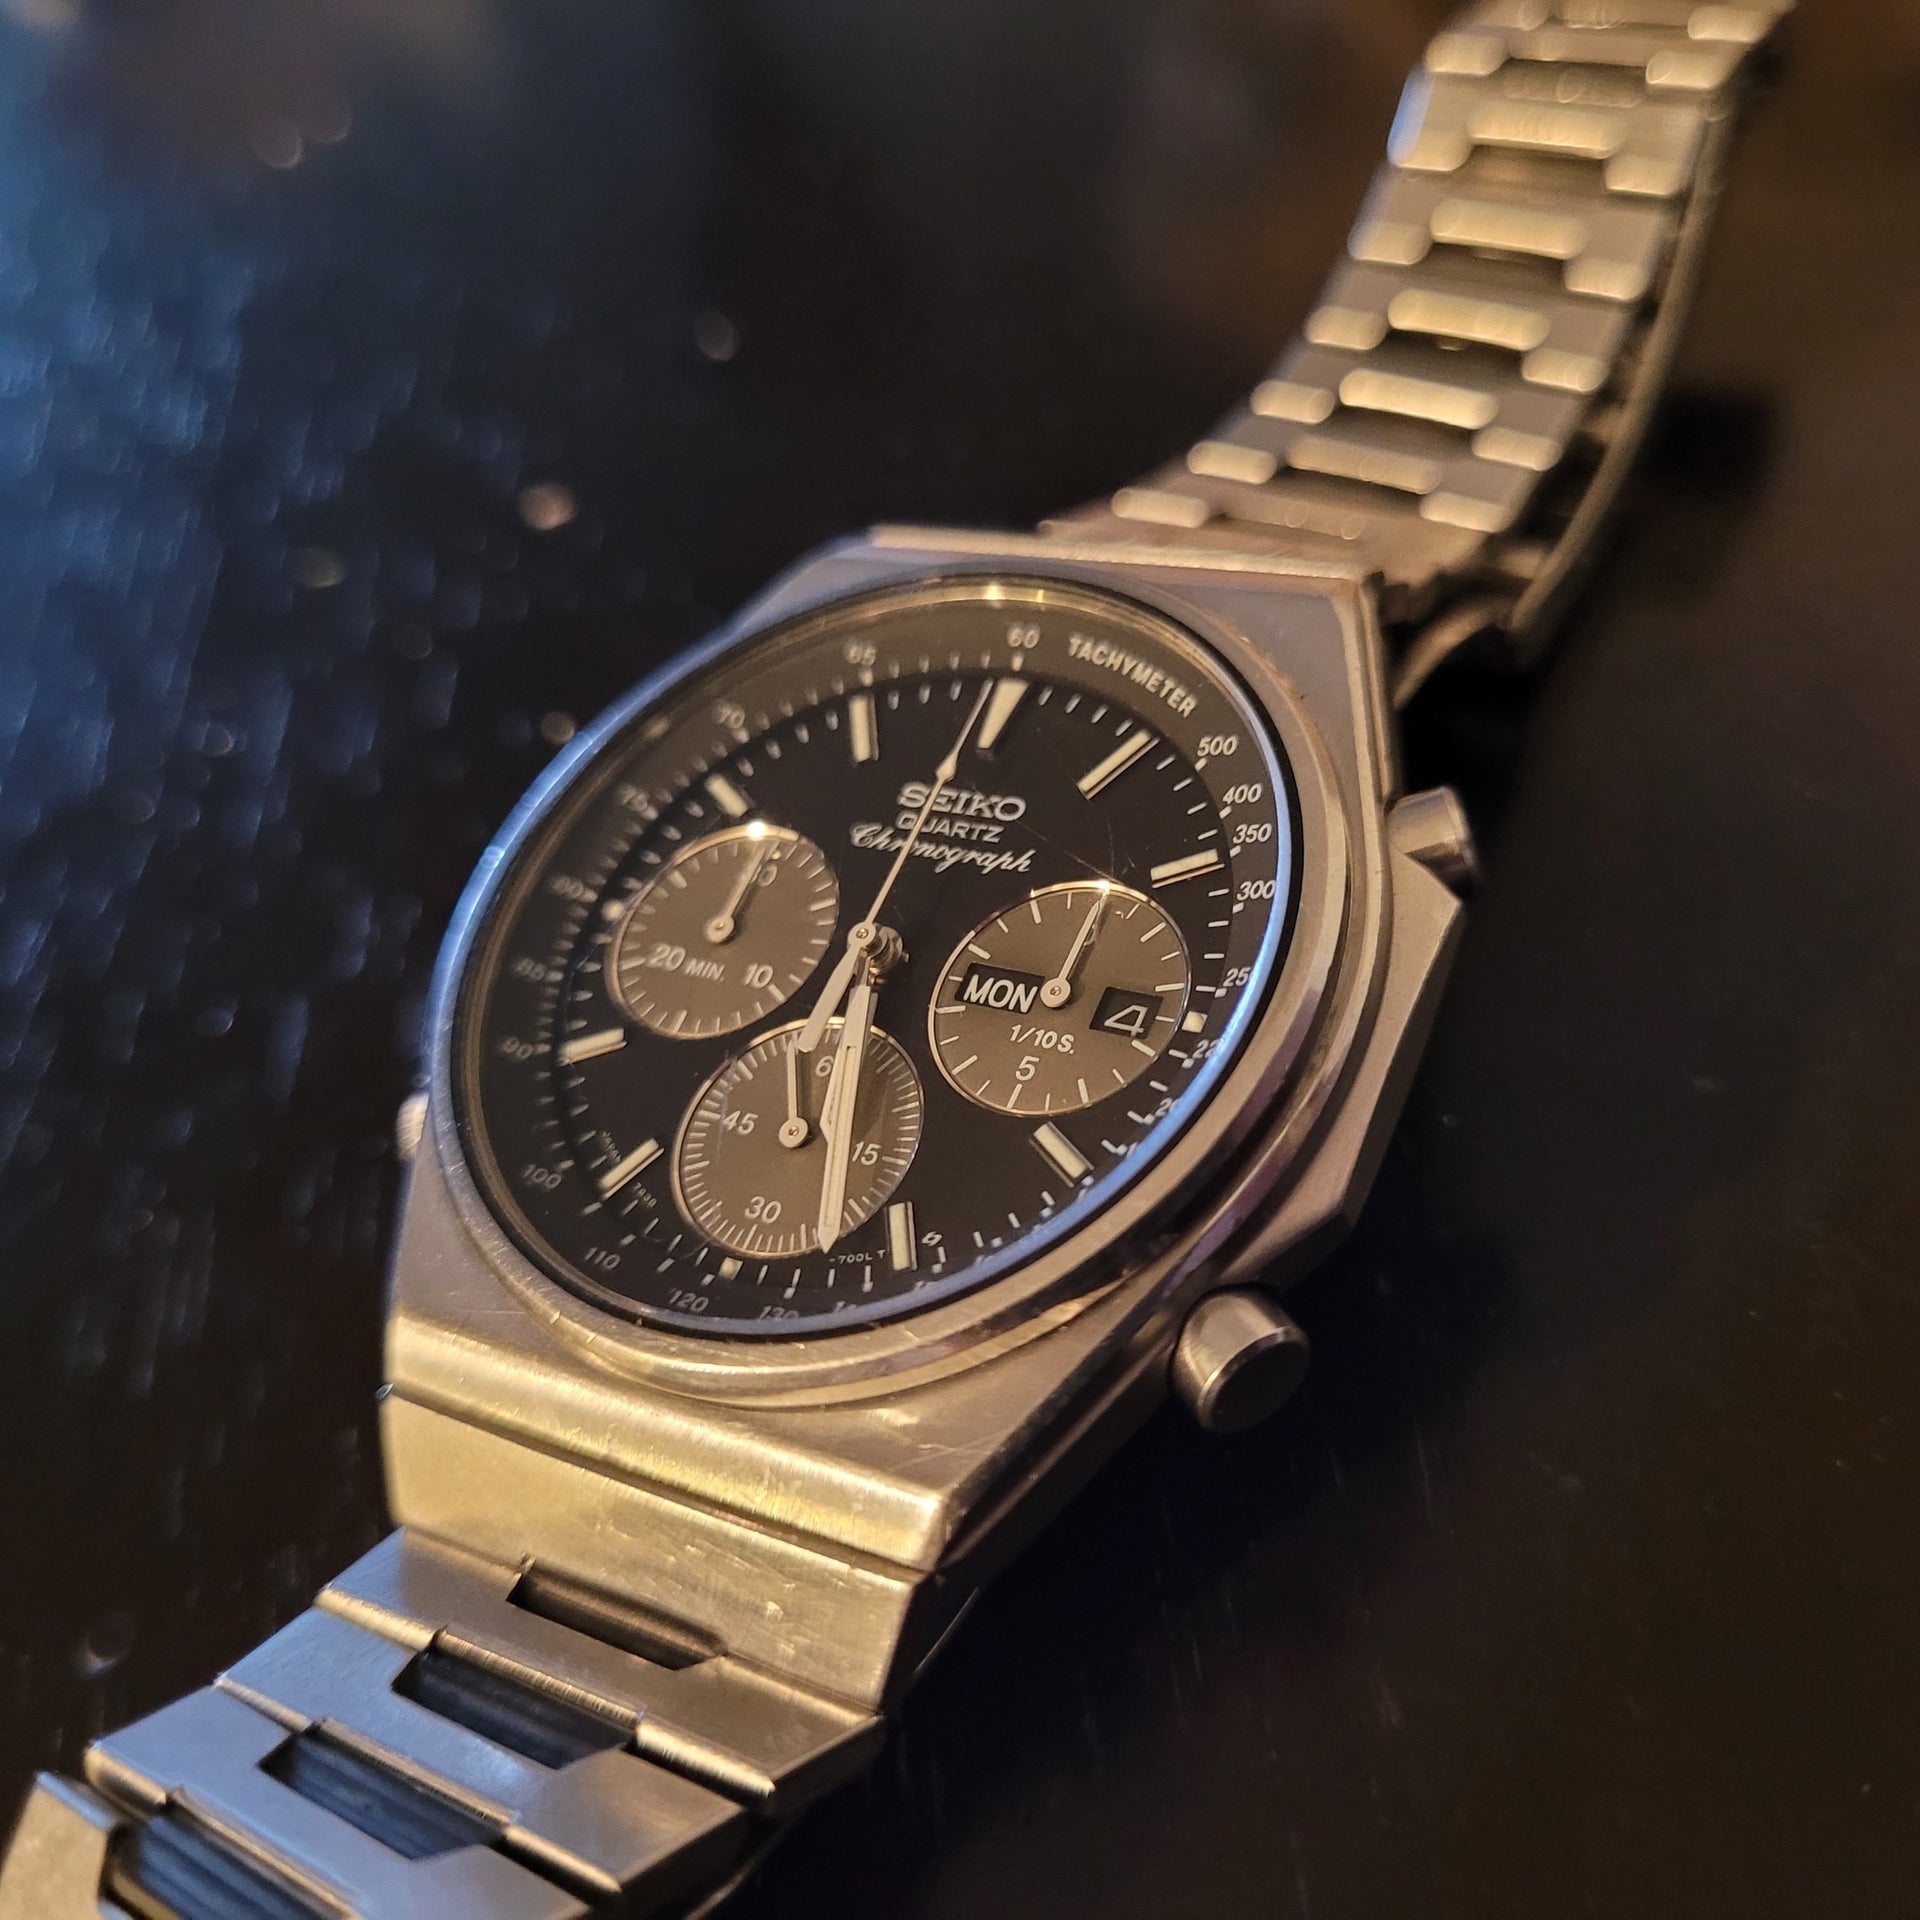 1983 Seiko 7a38-7000 quartz chronograph/$585 obo | WatchUSeek Watch Forums